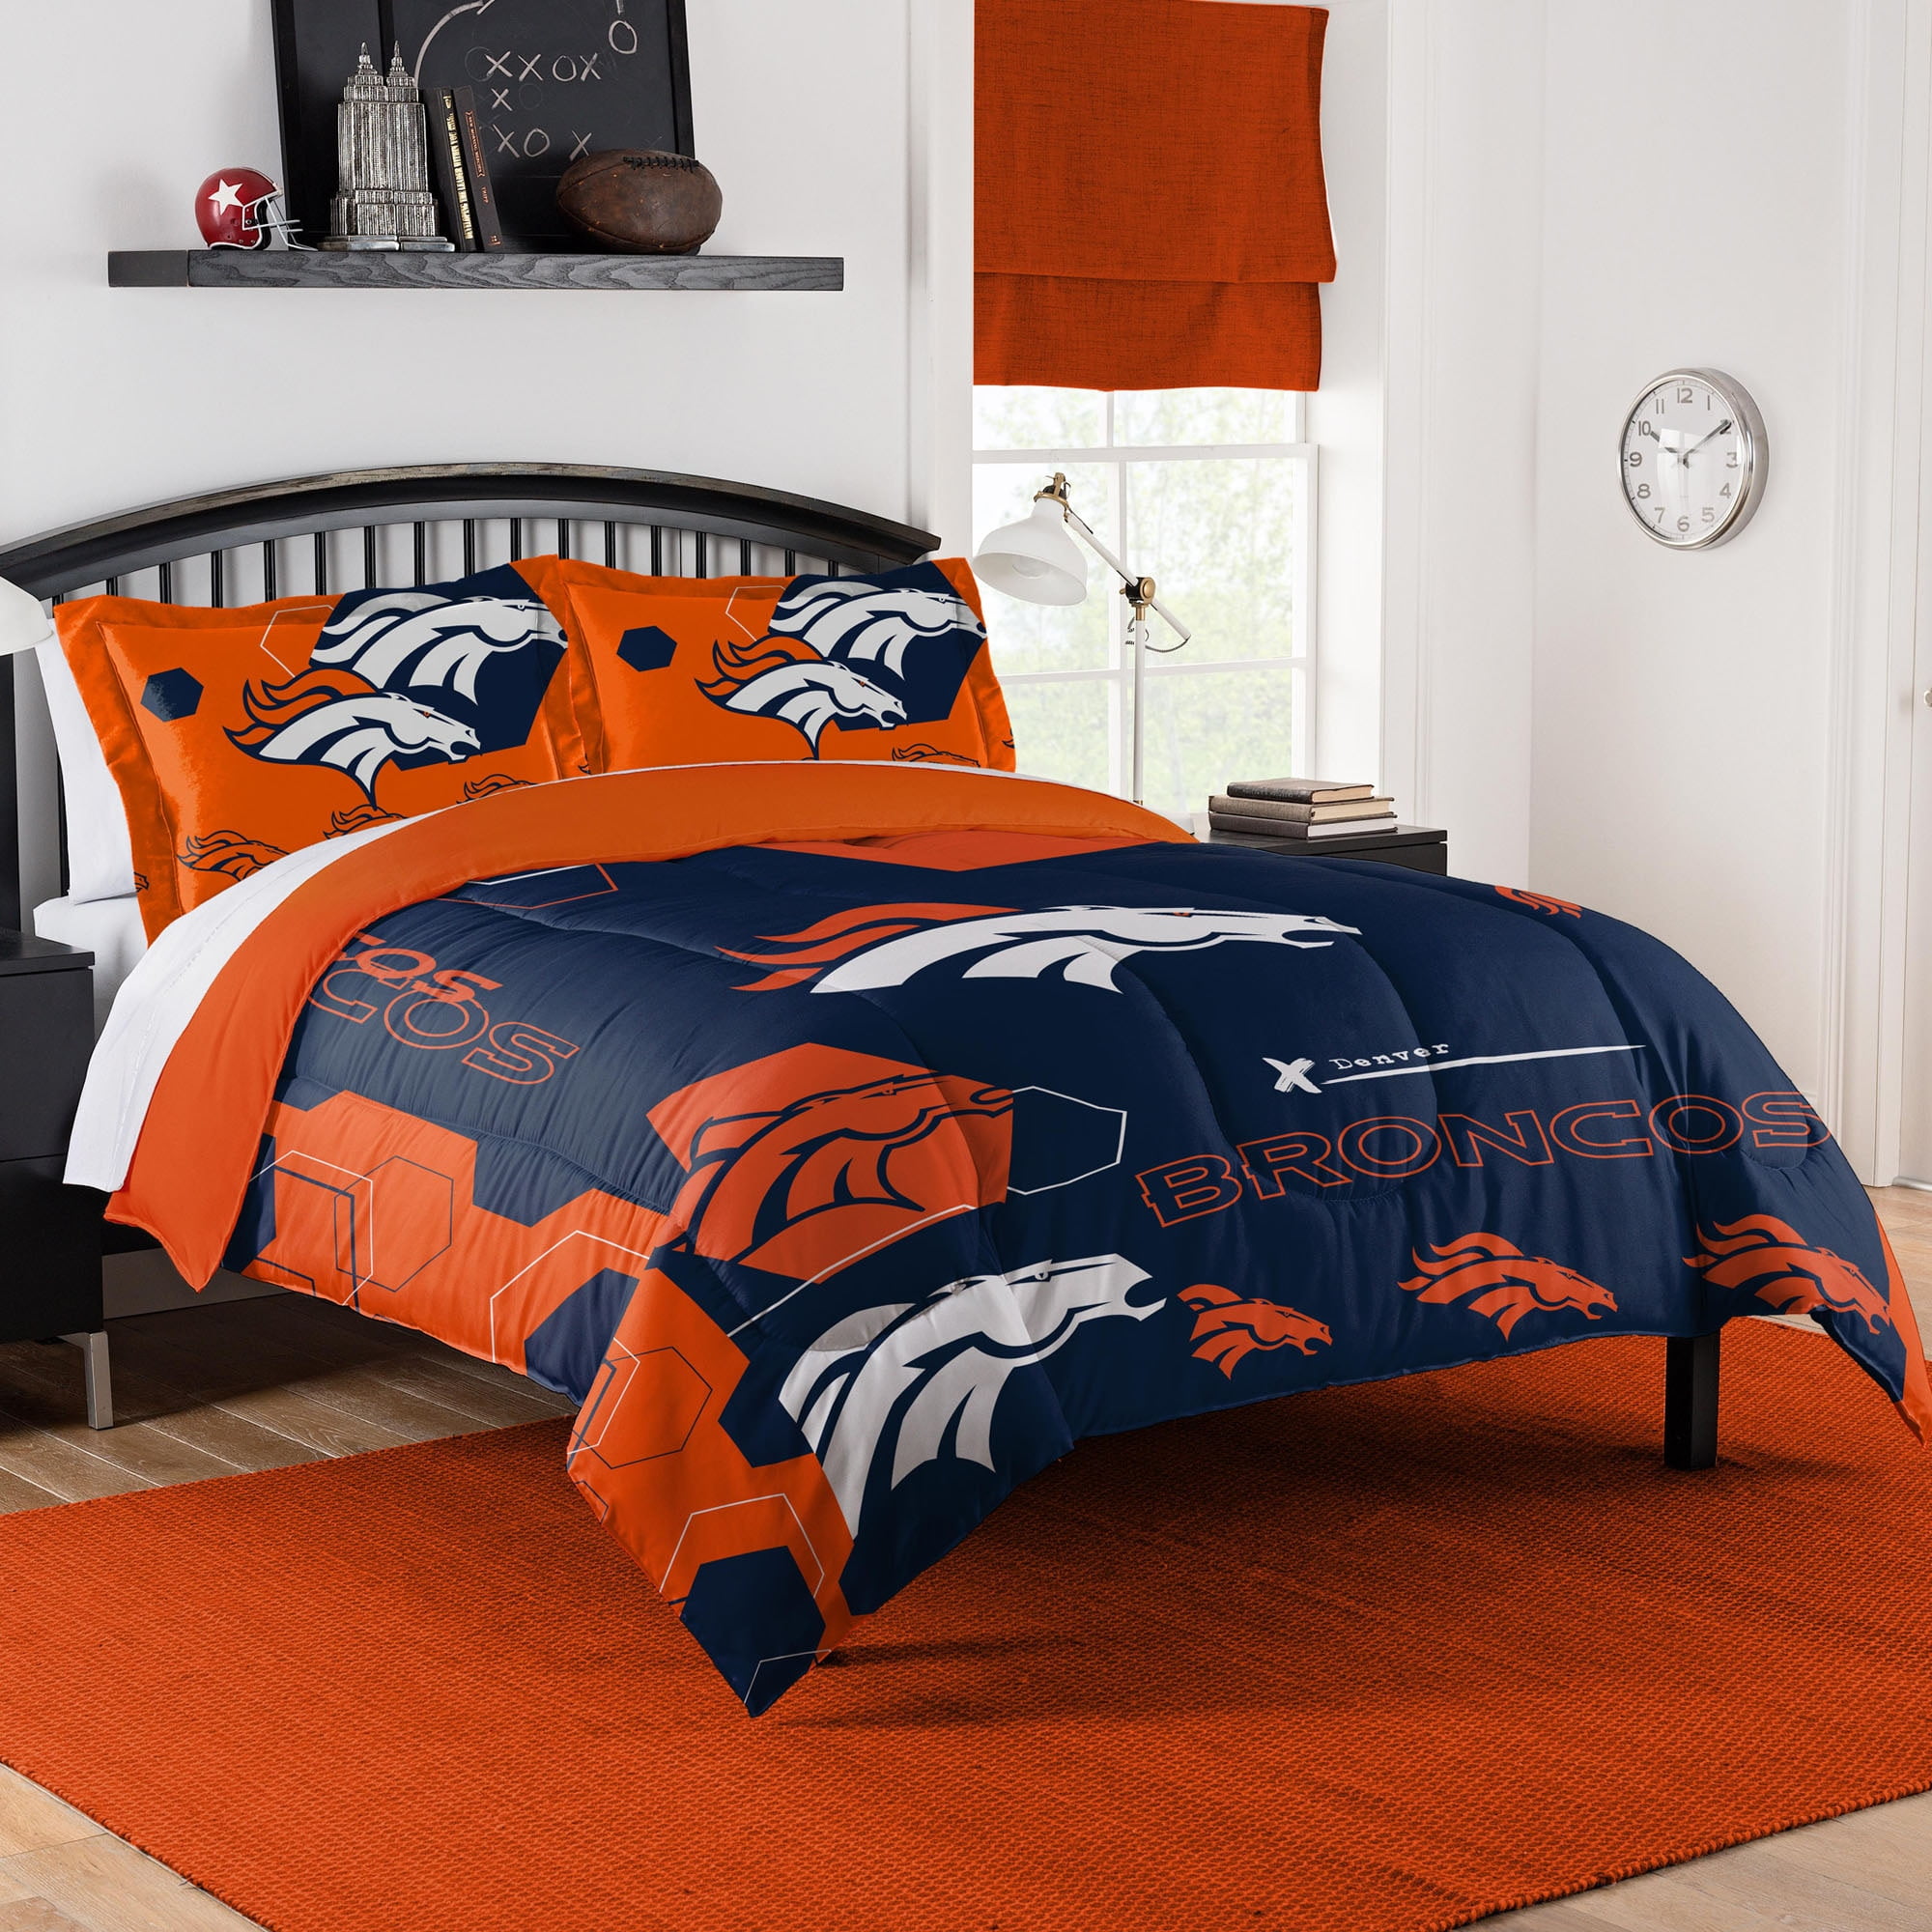 2 Pc TWIN Size Printed Comforter/Sham Set Denver Broncos 